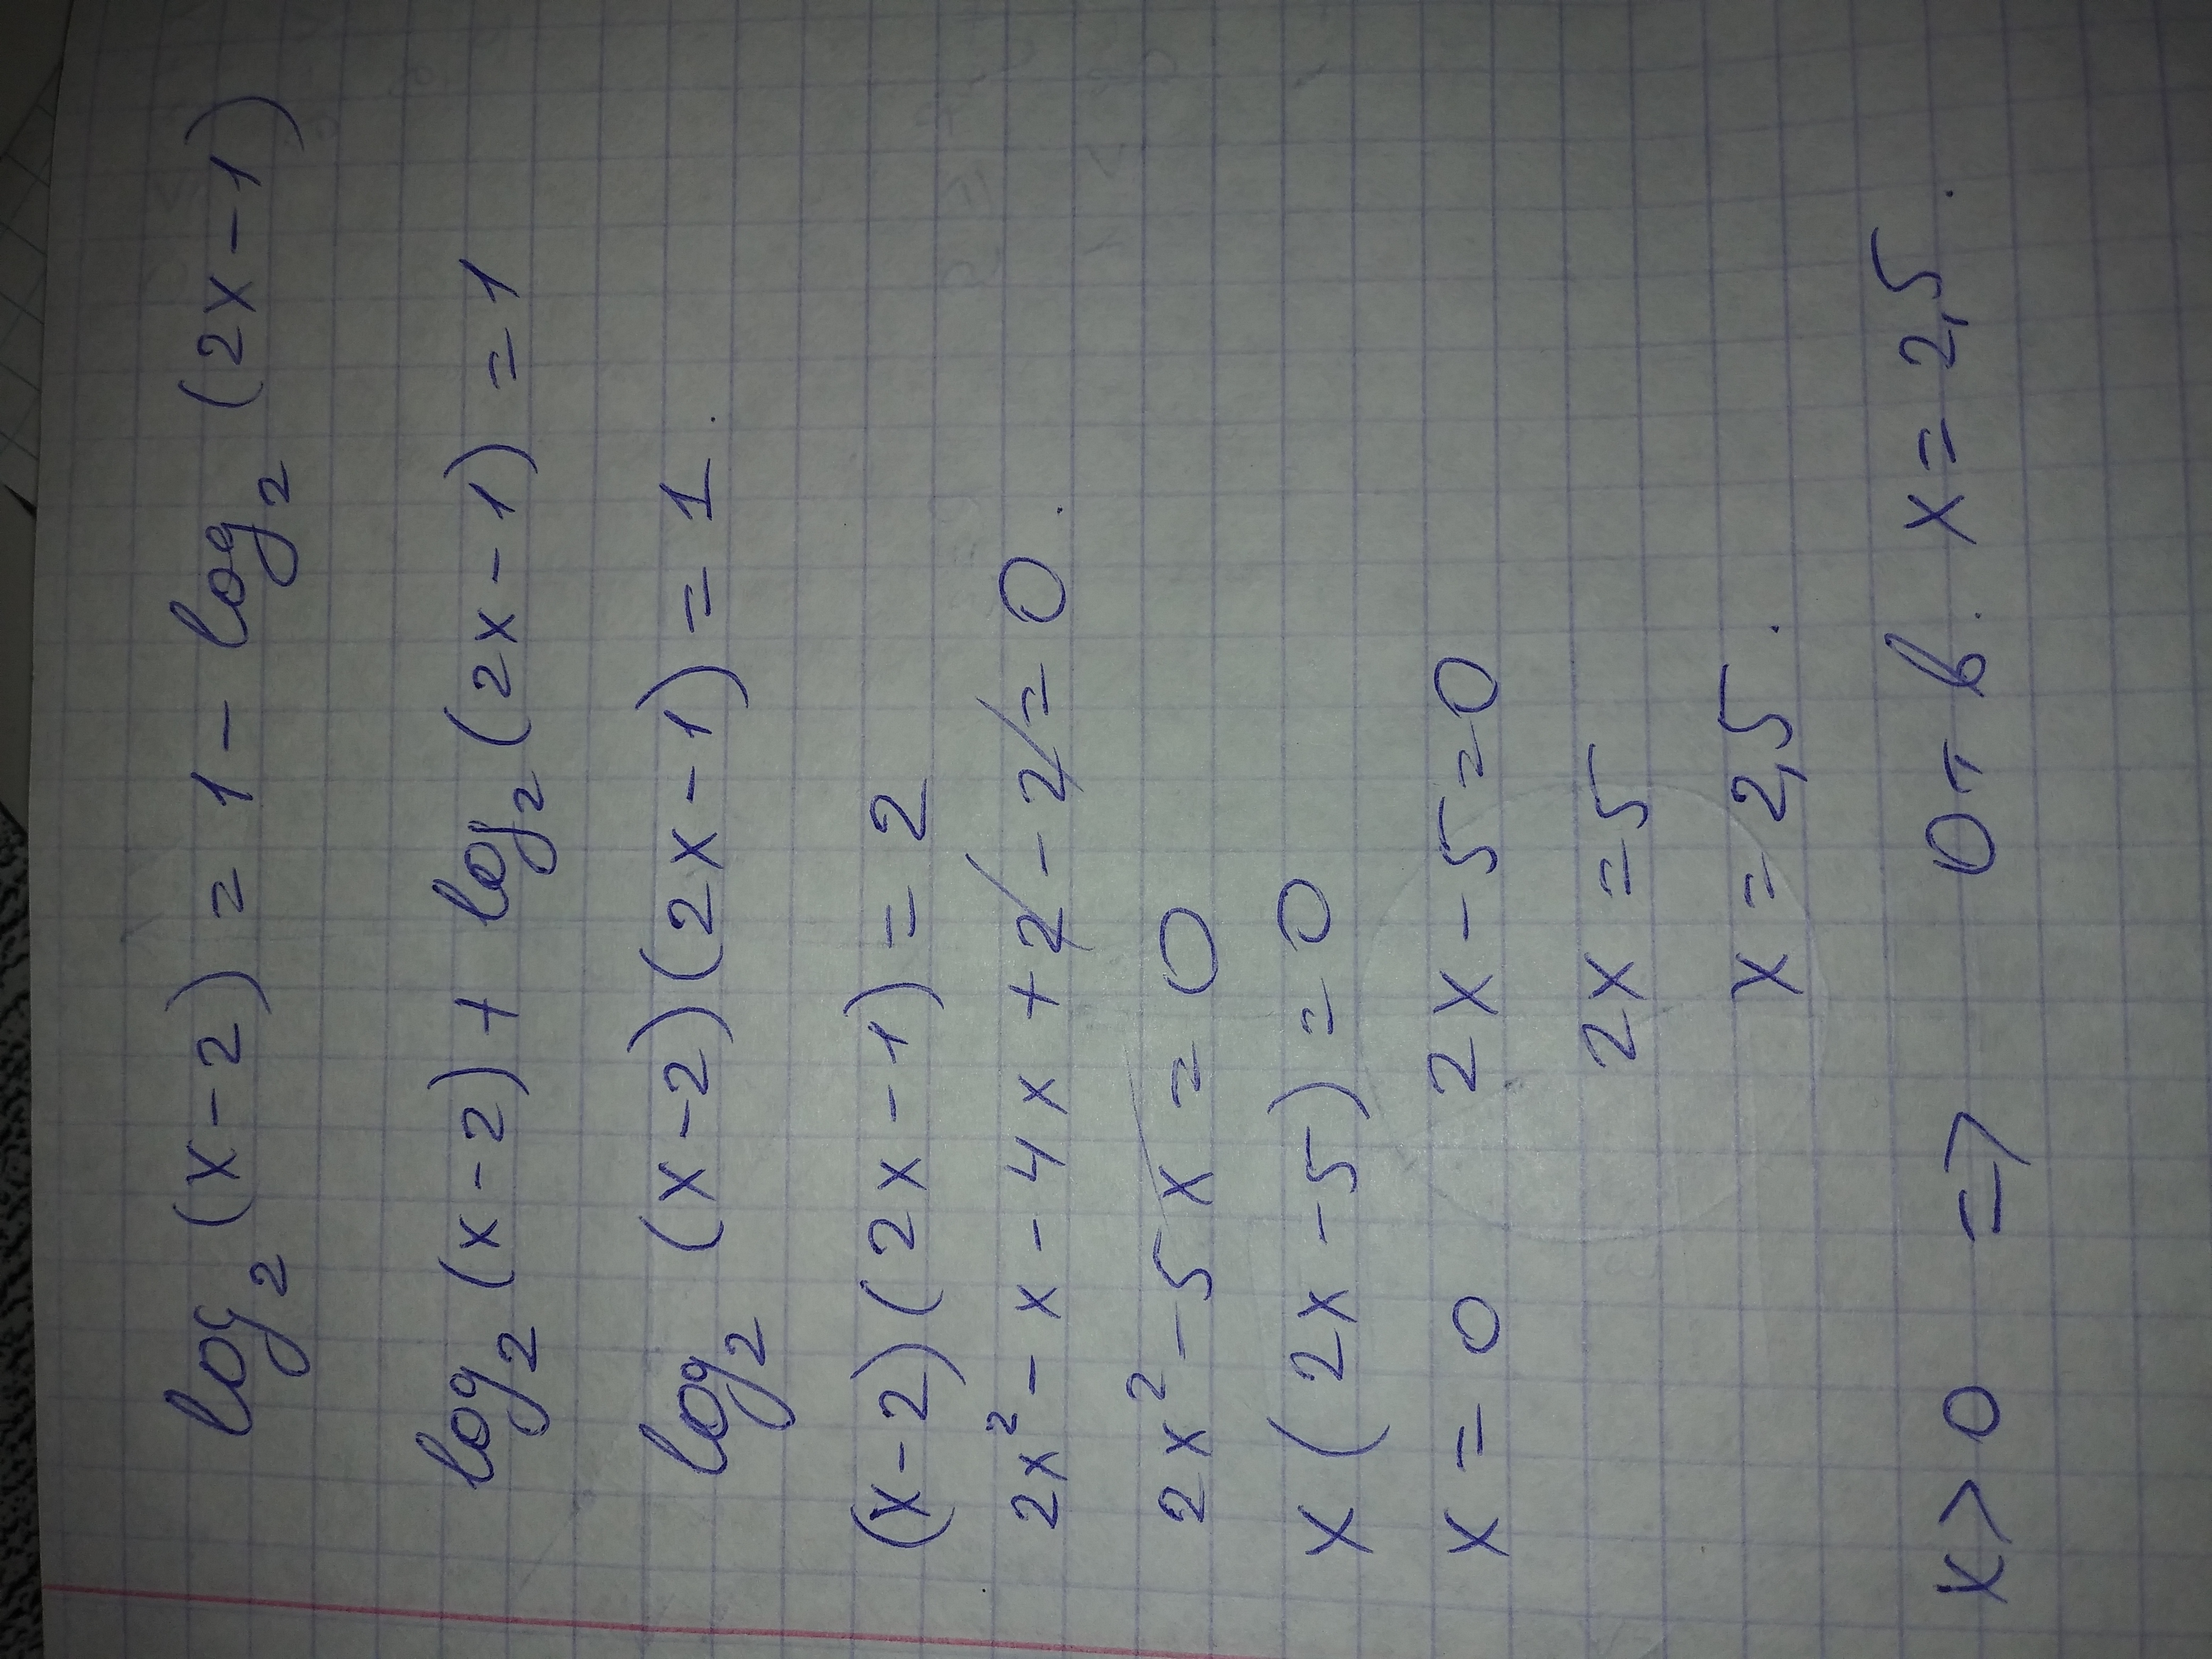 1 log 2 9x 2 5. Log2 2/x-1 log2 x. 2log2 1-2x -log 1/x-2. Log2^(x+1)^2-1(log2x^2+2x+3(x^2-2x)). Log x-1 1/2 >1/2.